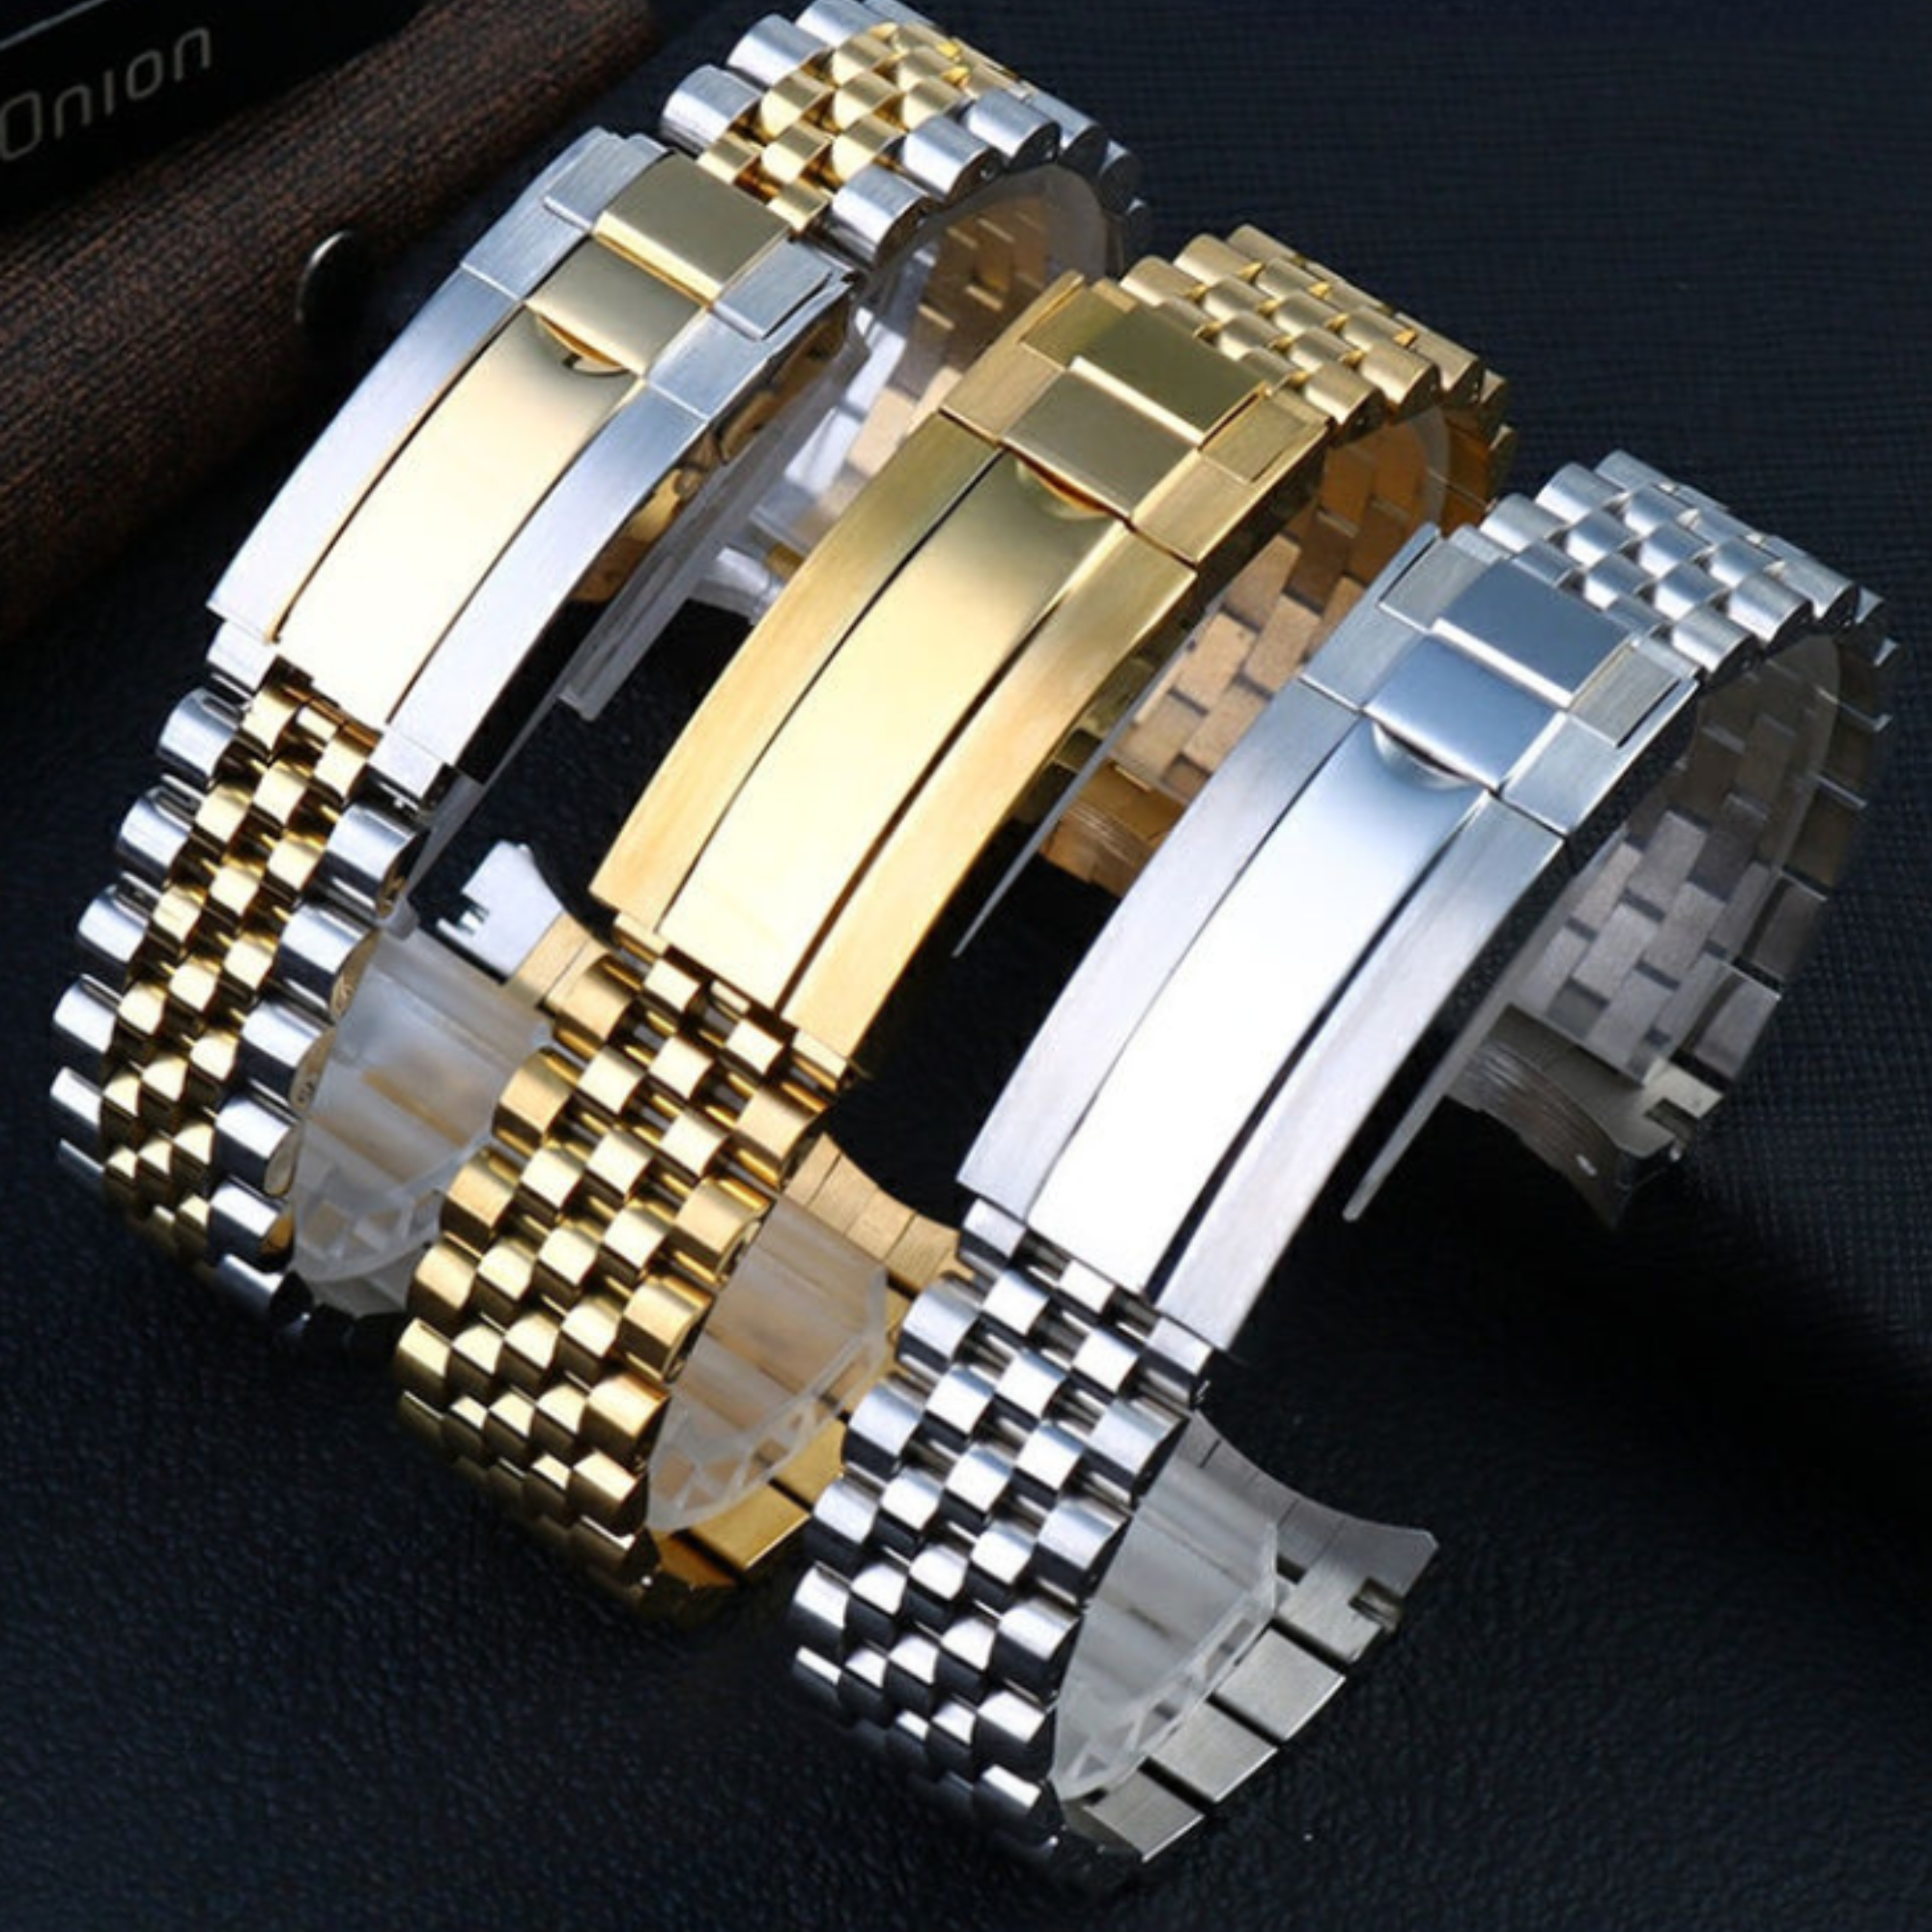 20mm Stainless Steel Vintage Jubilee Watch Band Wristband Bracelet Strap - Golden Dual Tone steel jubilee watch bracelet strap india dream watches